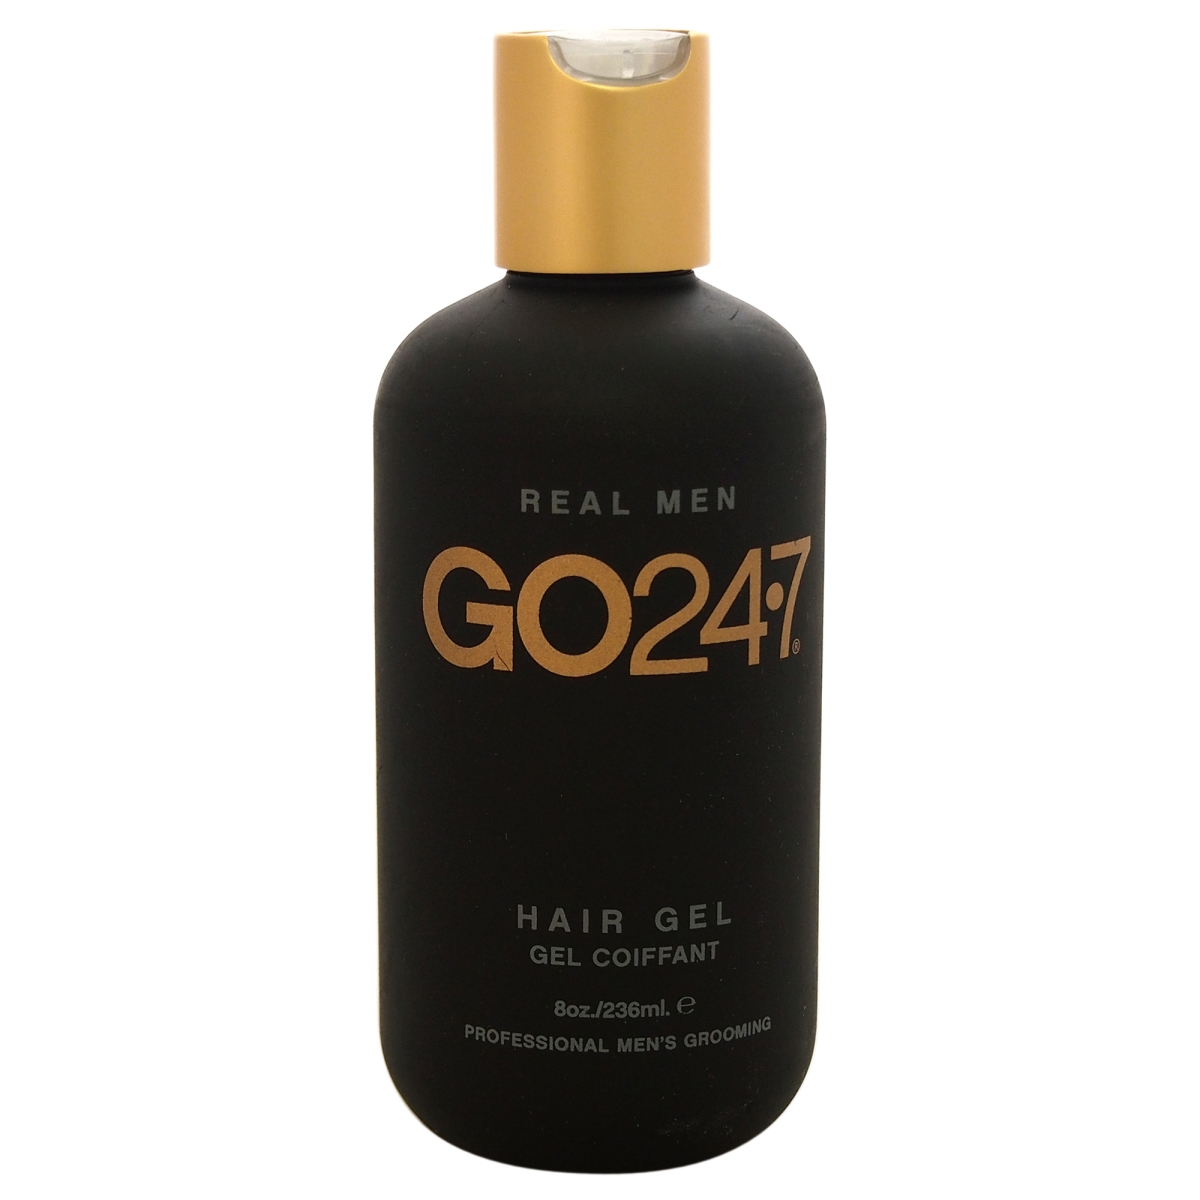 M-hc-1268 8 Oz Real Men Hair Gel For Men